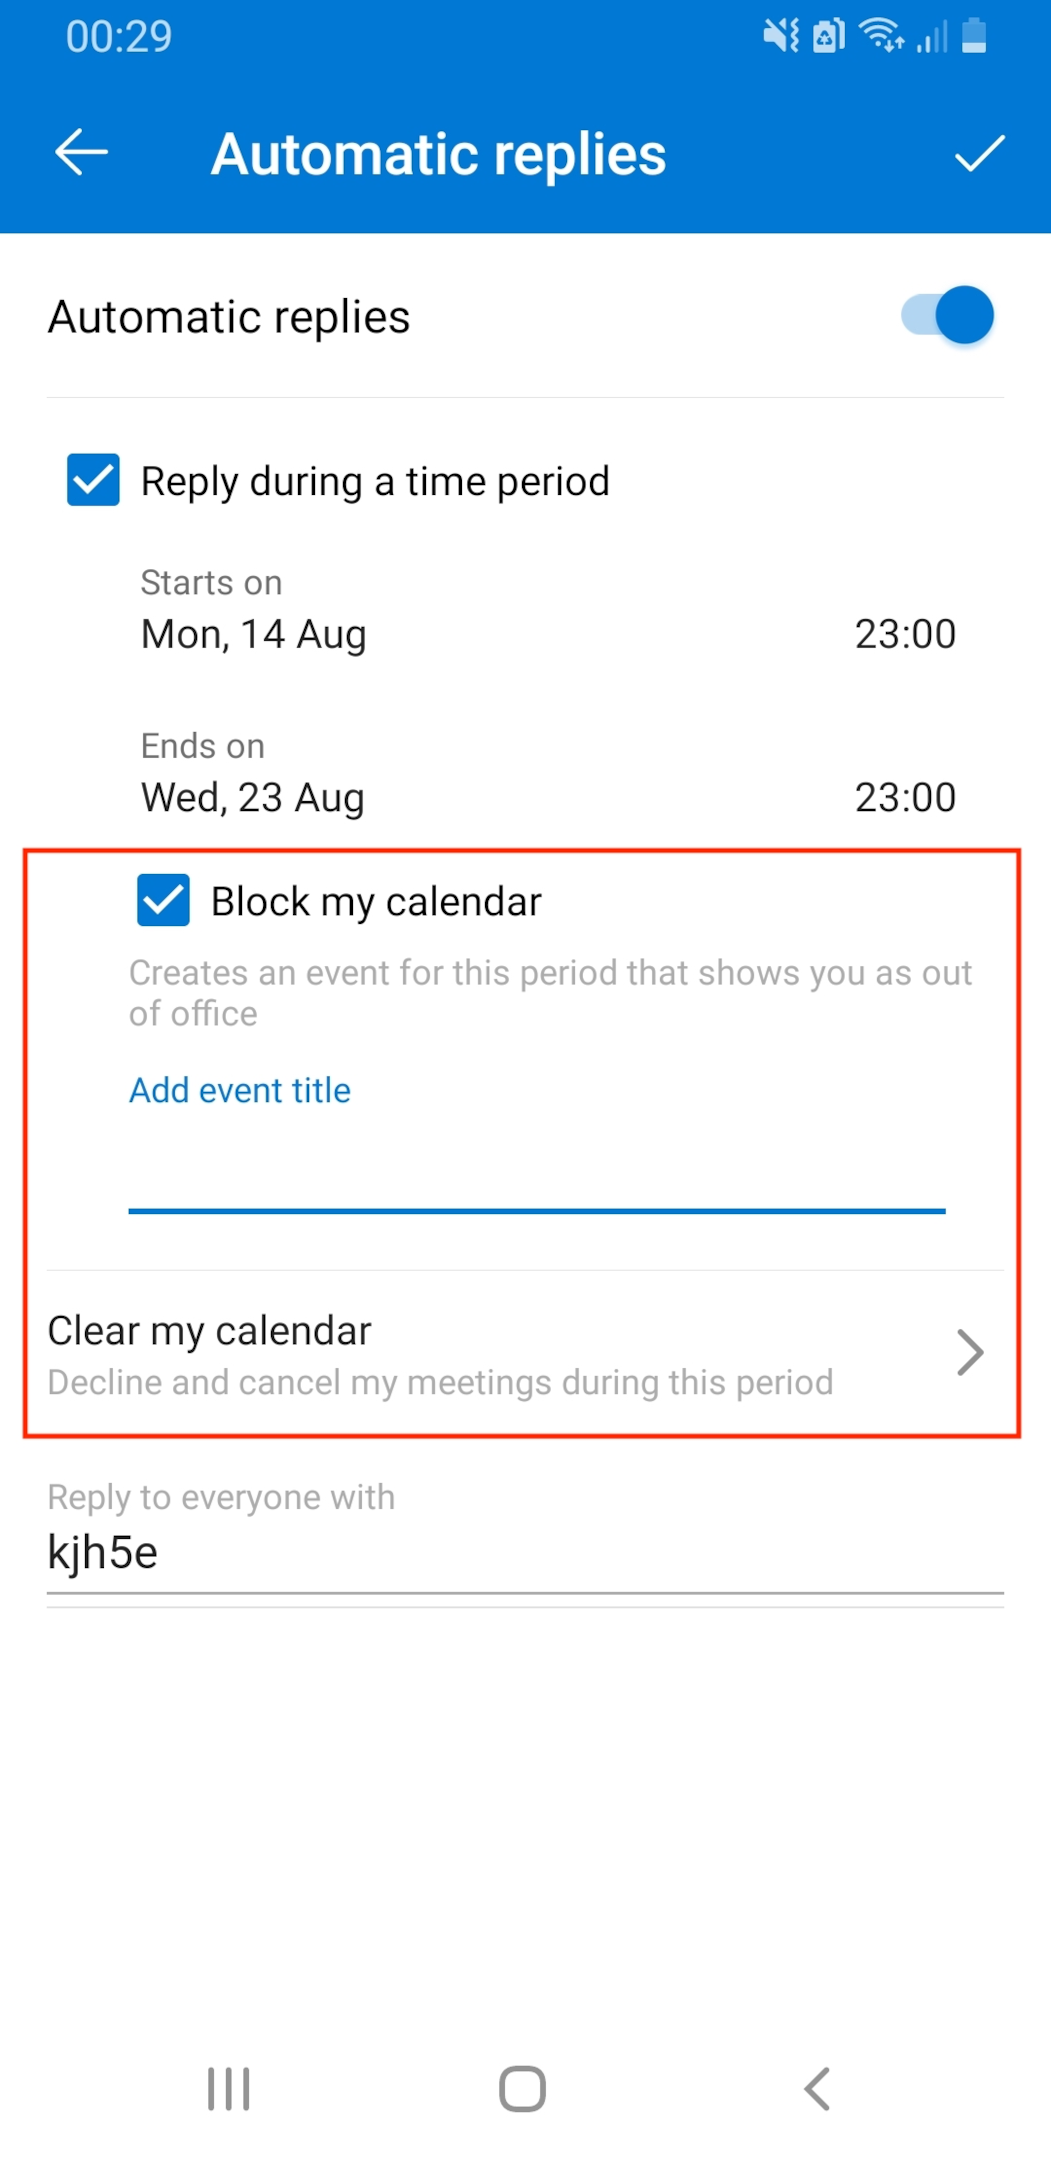 Follow same steps to manage calendar and invitations